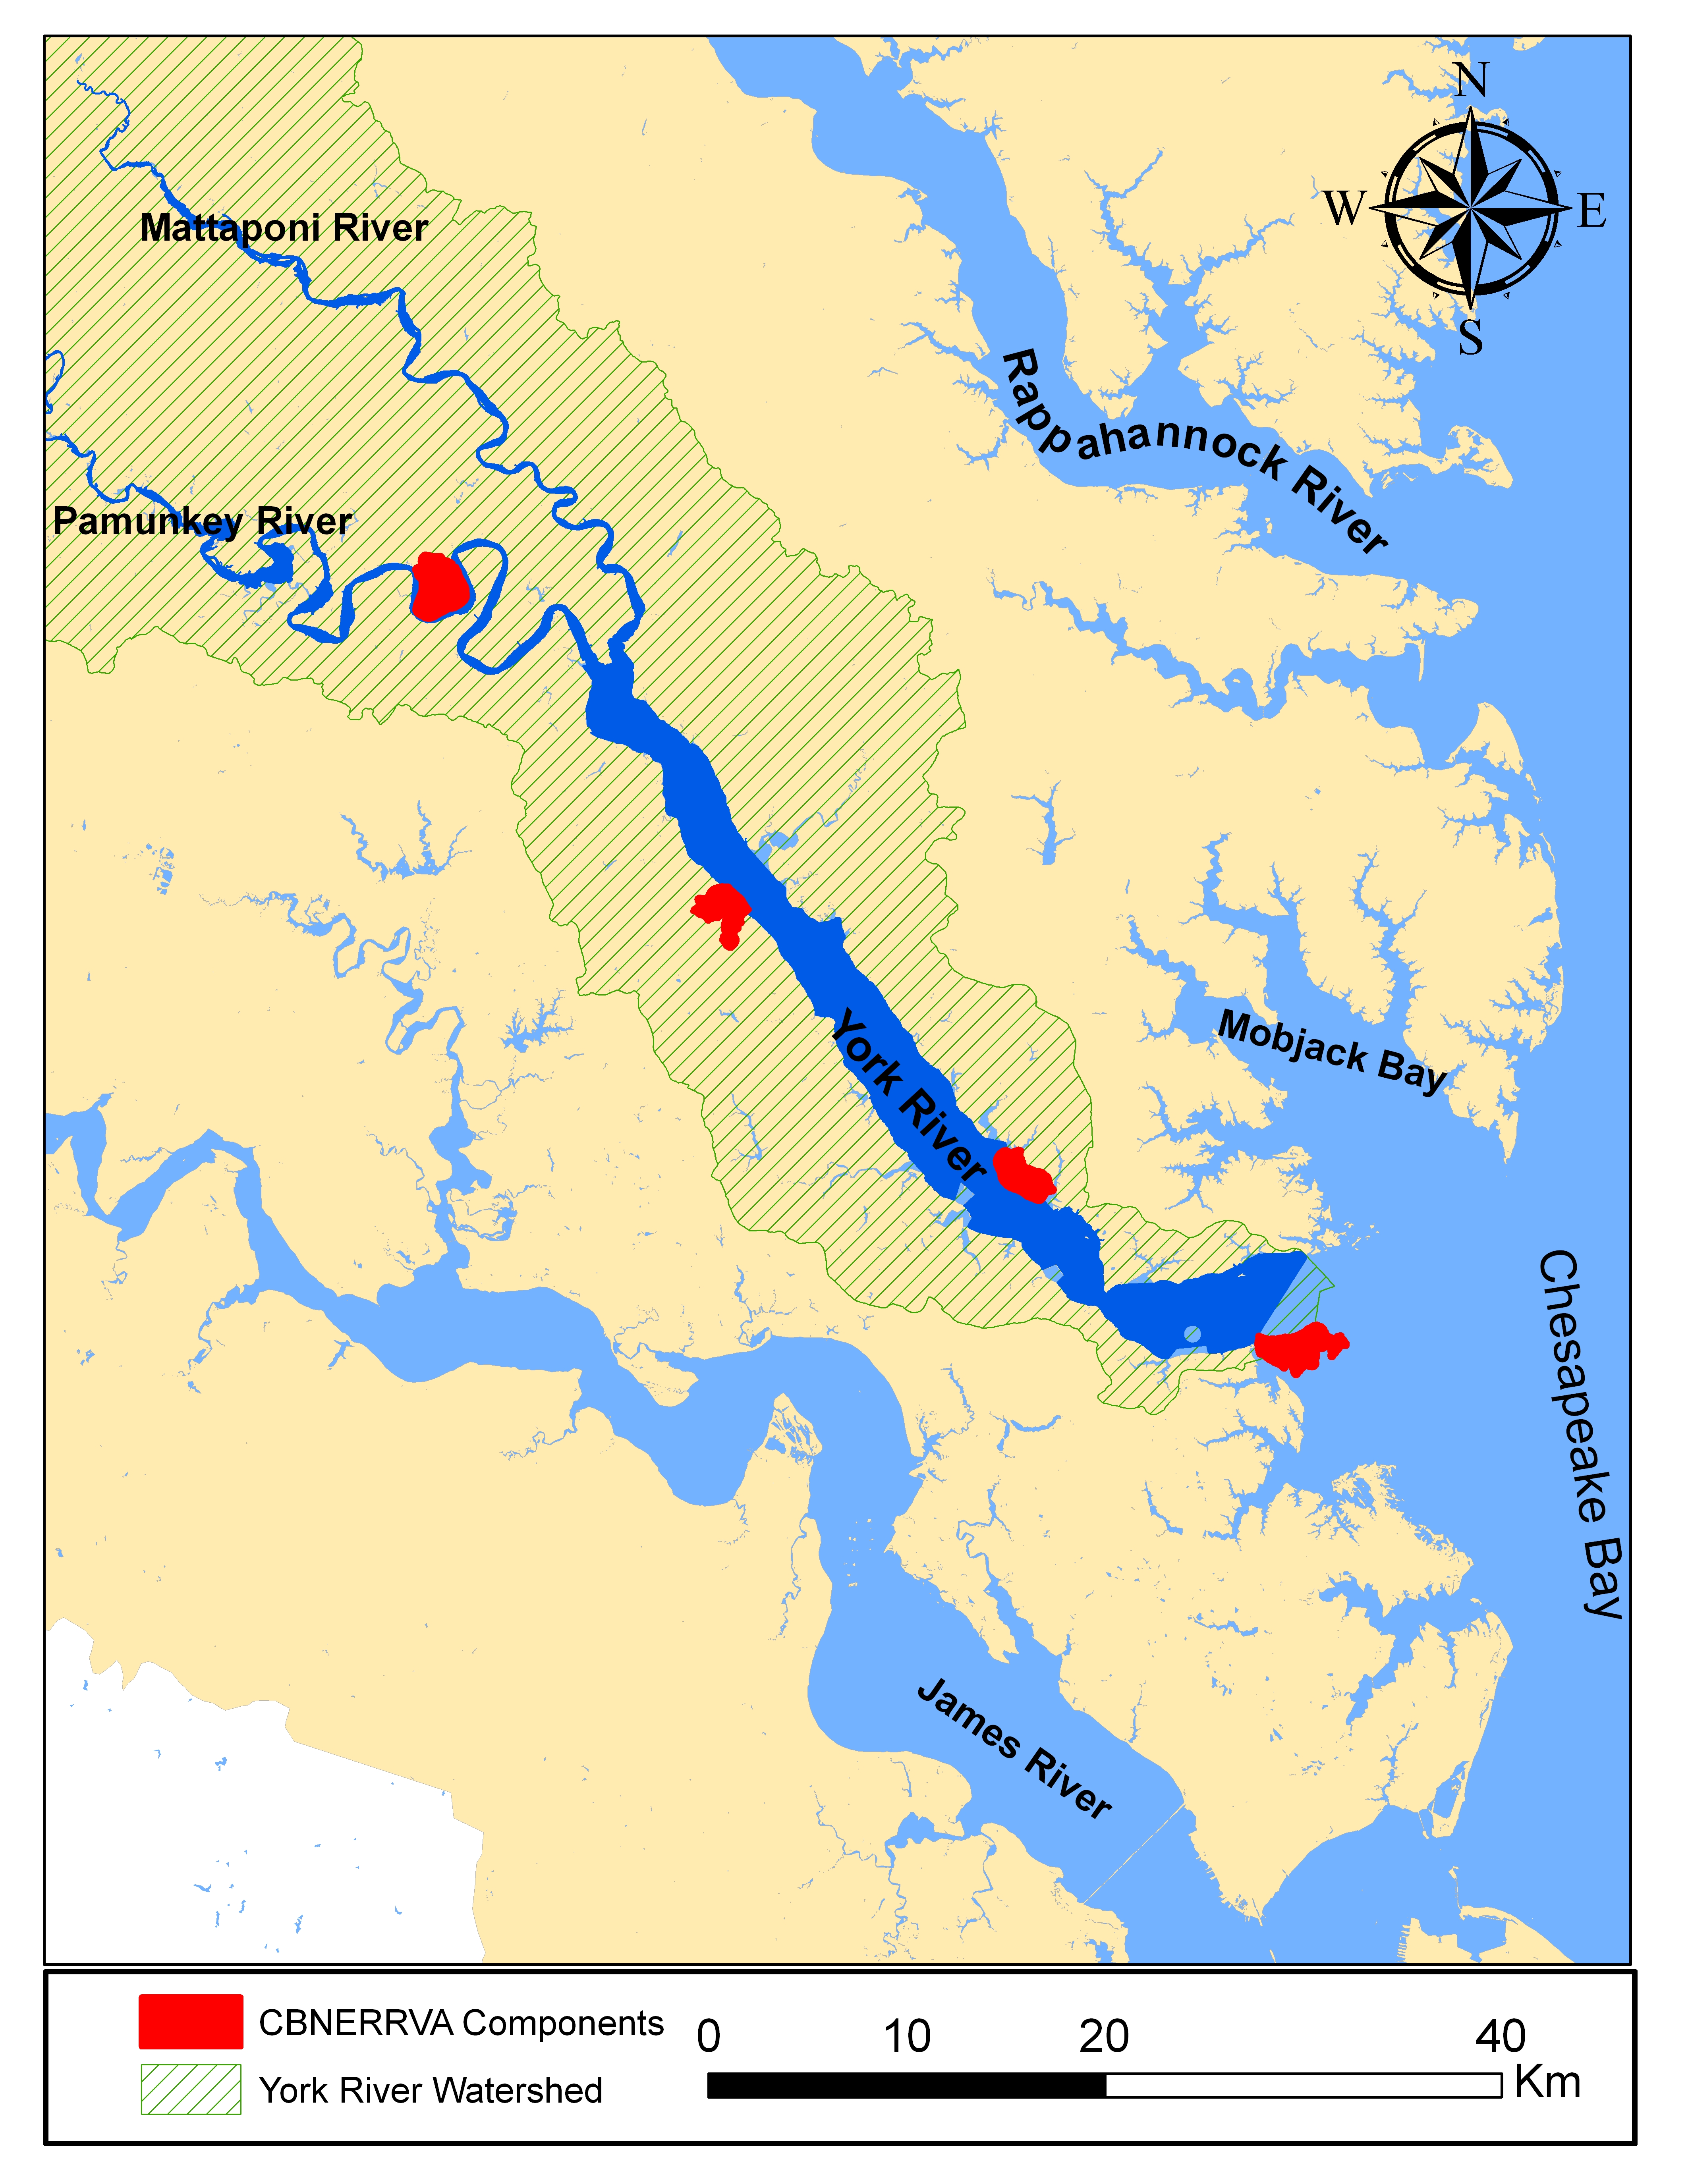 CBNERR sites on the York River, Virginia